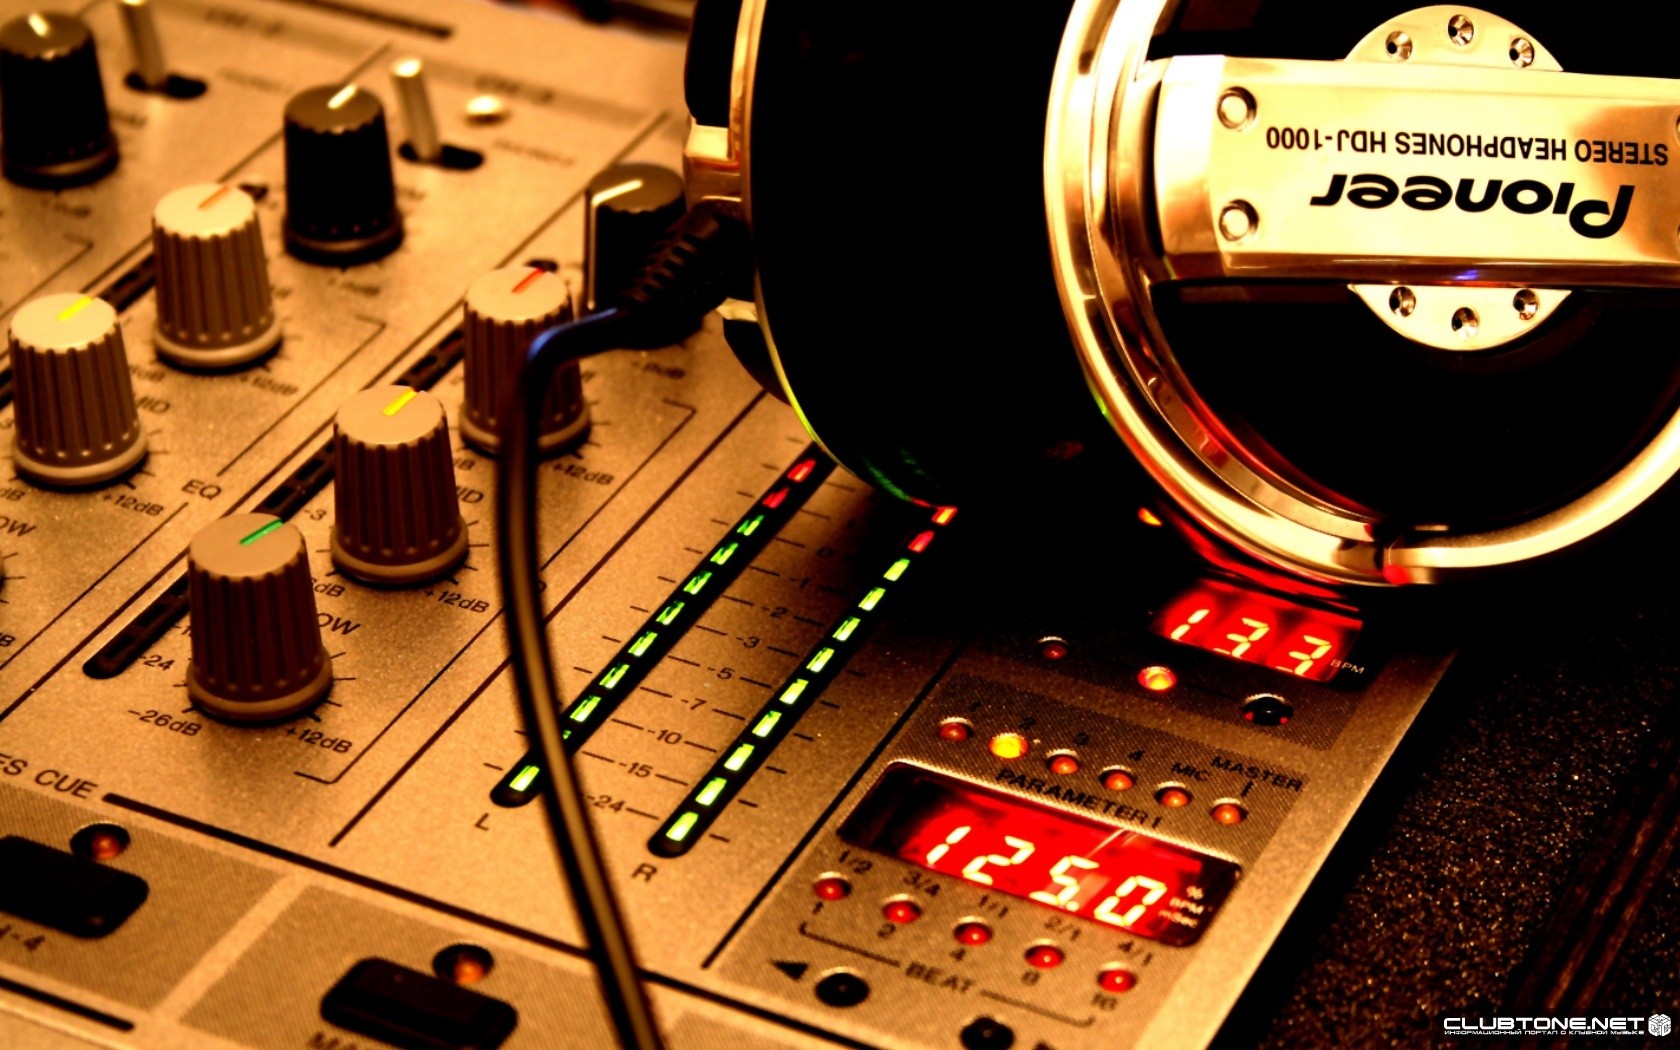 General 1680x1050 technology pioneer (logo) headphones DJ audio mixing consoles music numbers